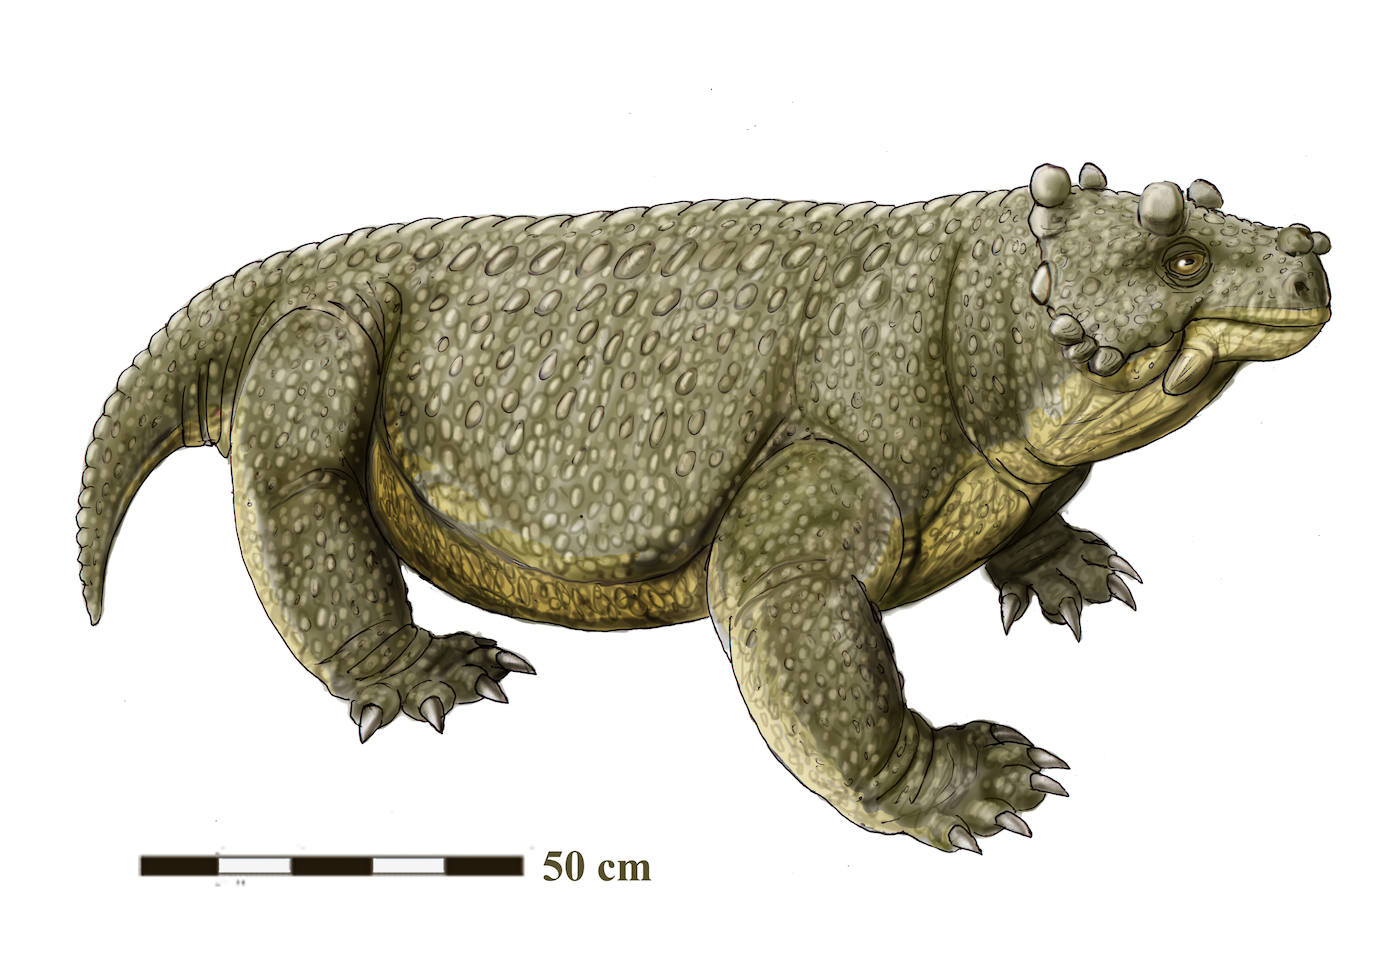 Imagen secundaria 1 - Animales de distintos periodos prehistóricos: mamut lanudo, bunostegos y dinosaurio.